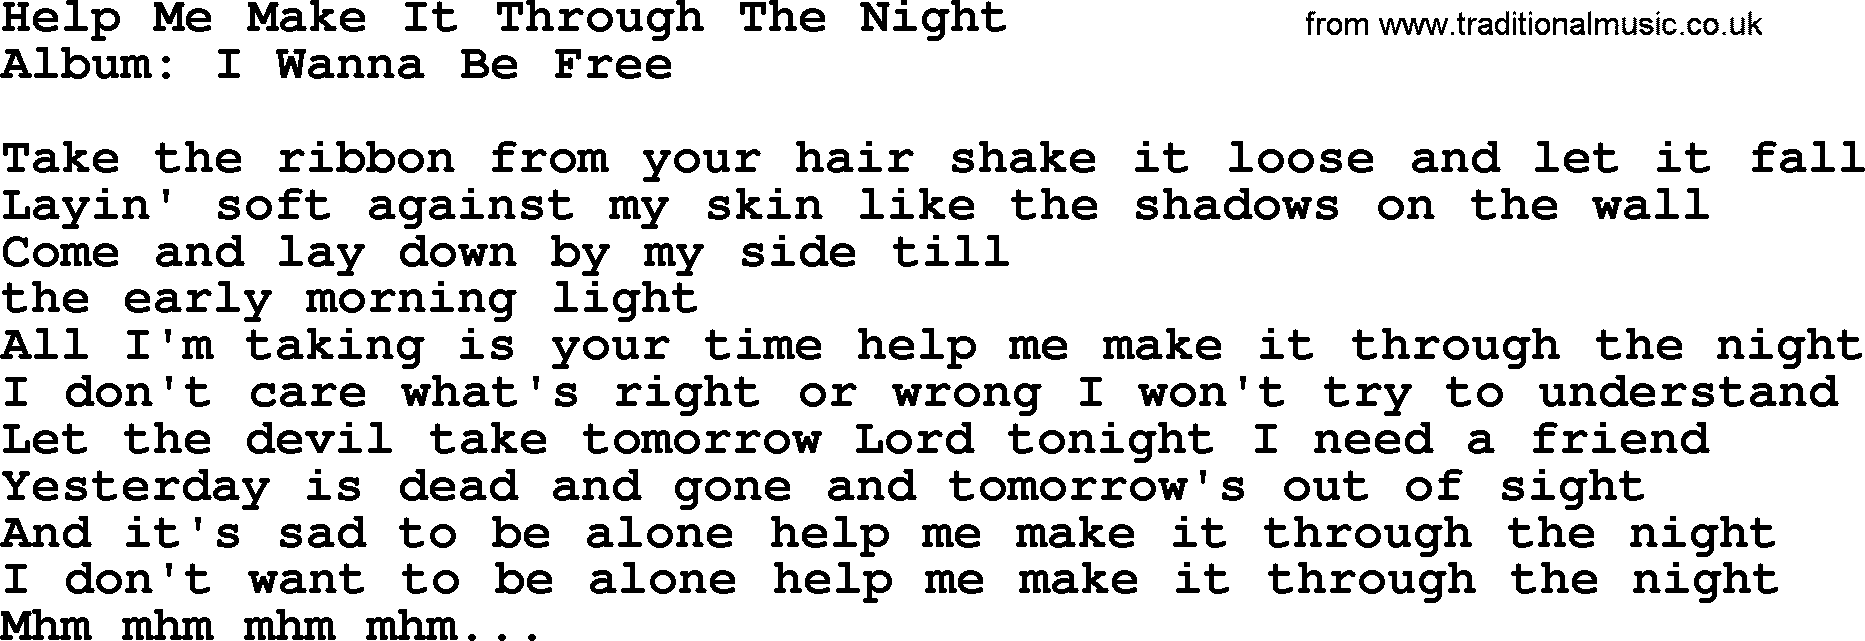 Loretta Lynn song: Help Me Make It Through The Night lyrics